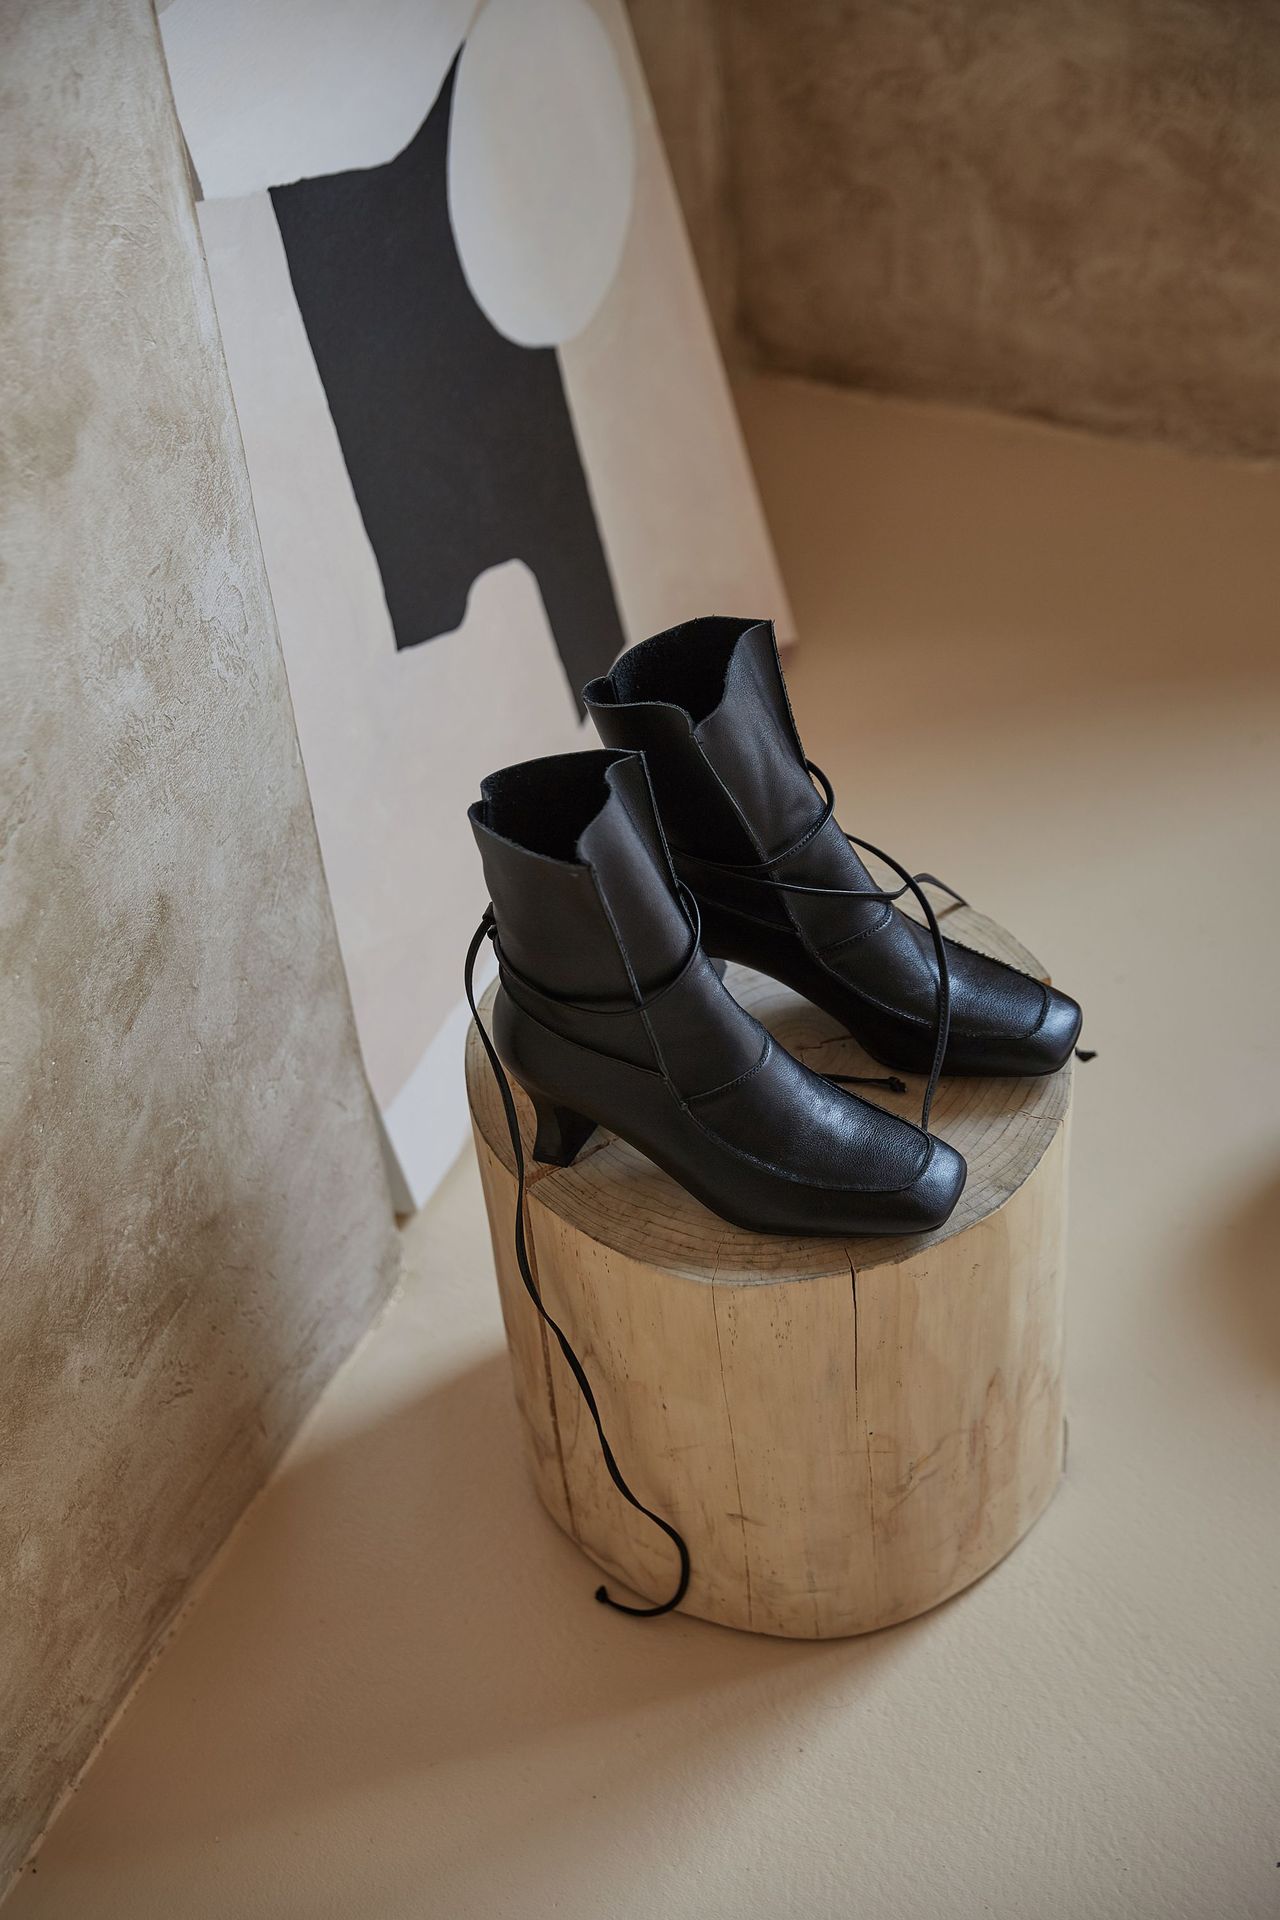 Chiko Telmao Square Toe Block Heels Boots